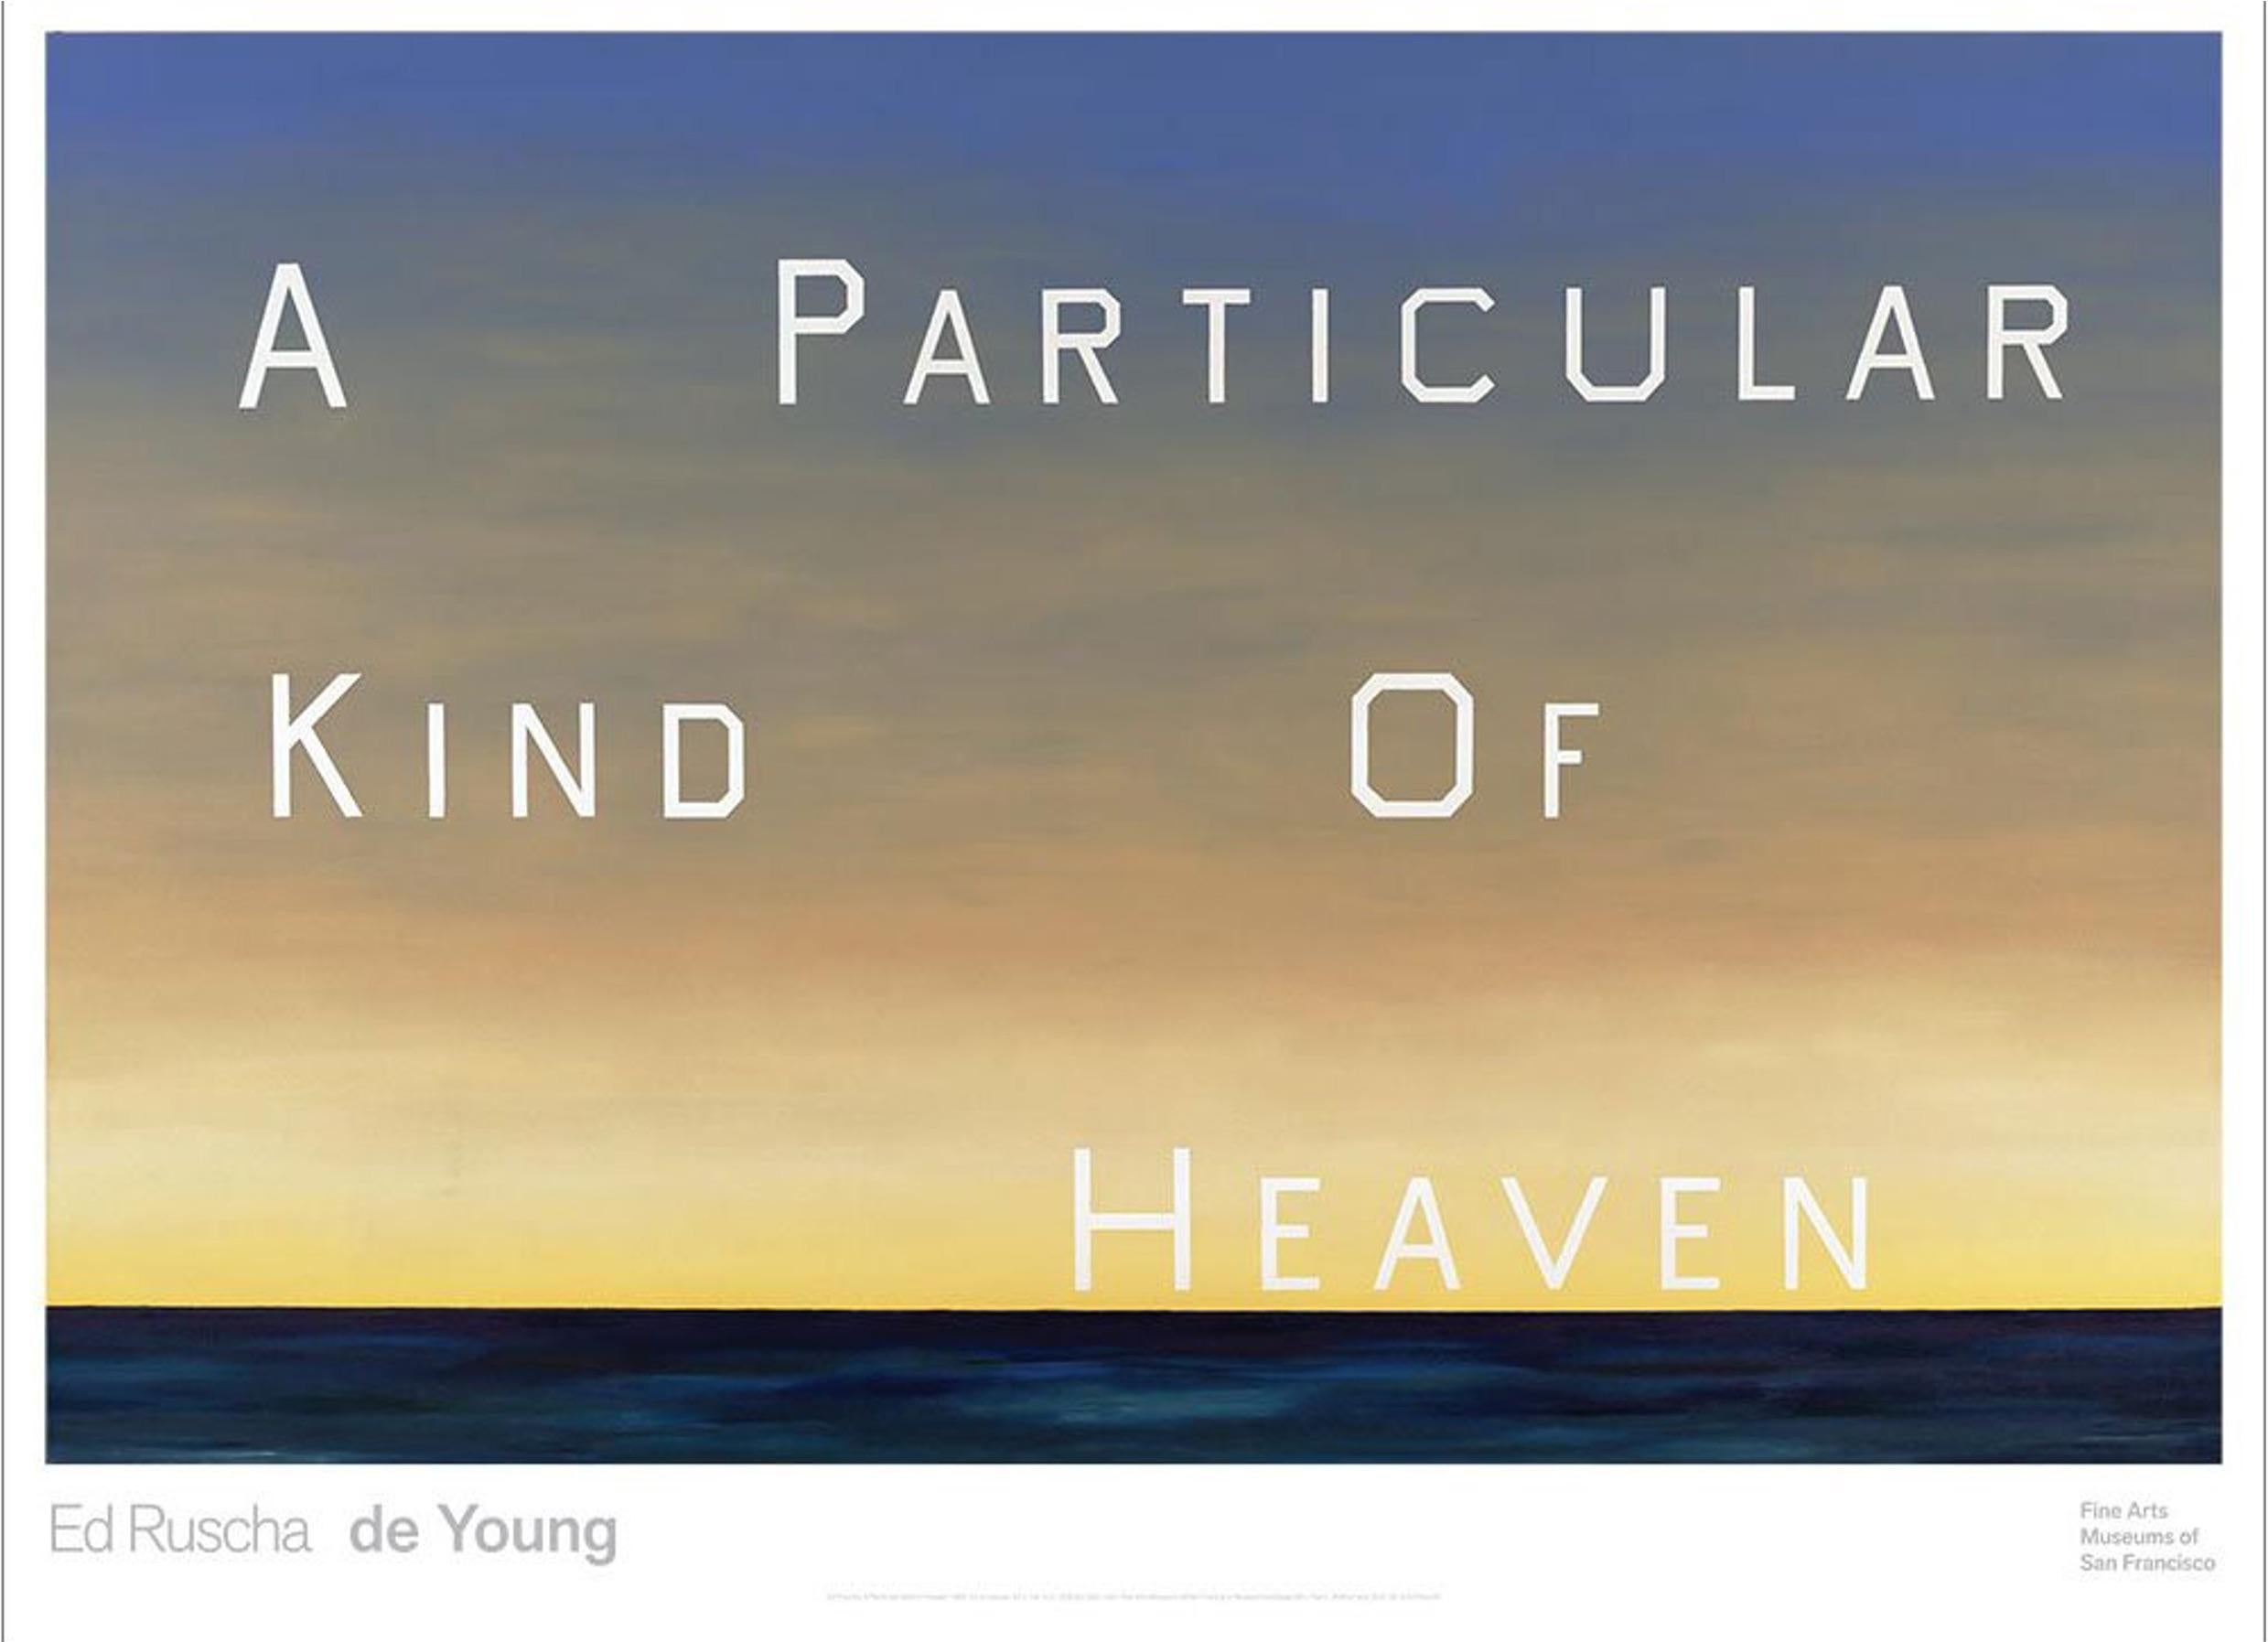 Ed Ruscha - A Particular Kind of Heaven 1